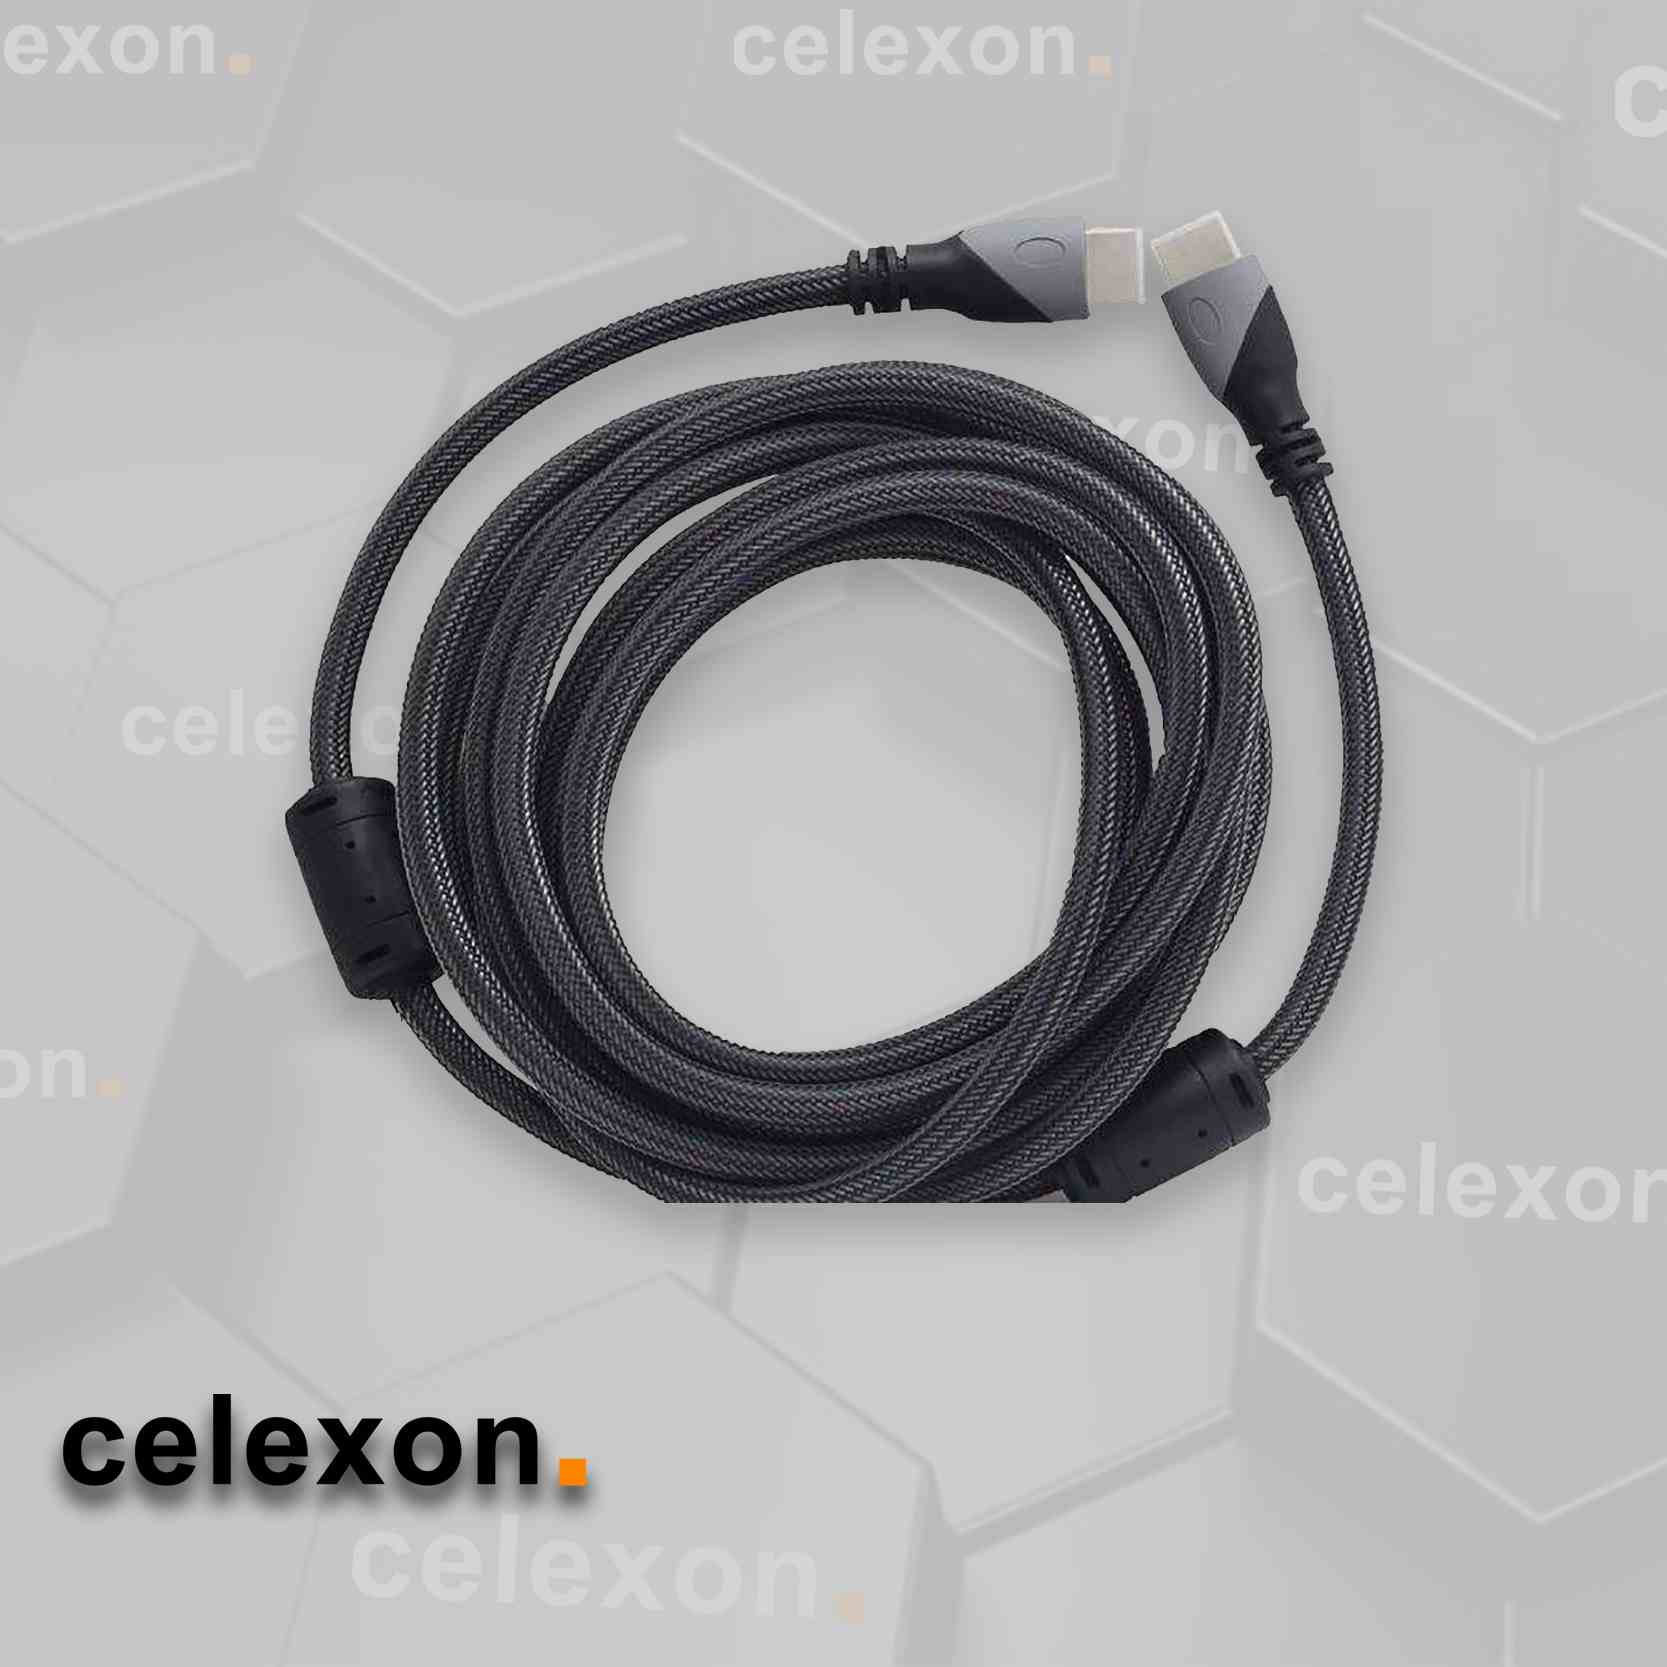 CC10 HDMI Cable Model CC10